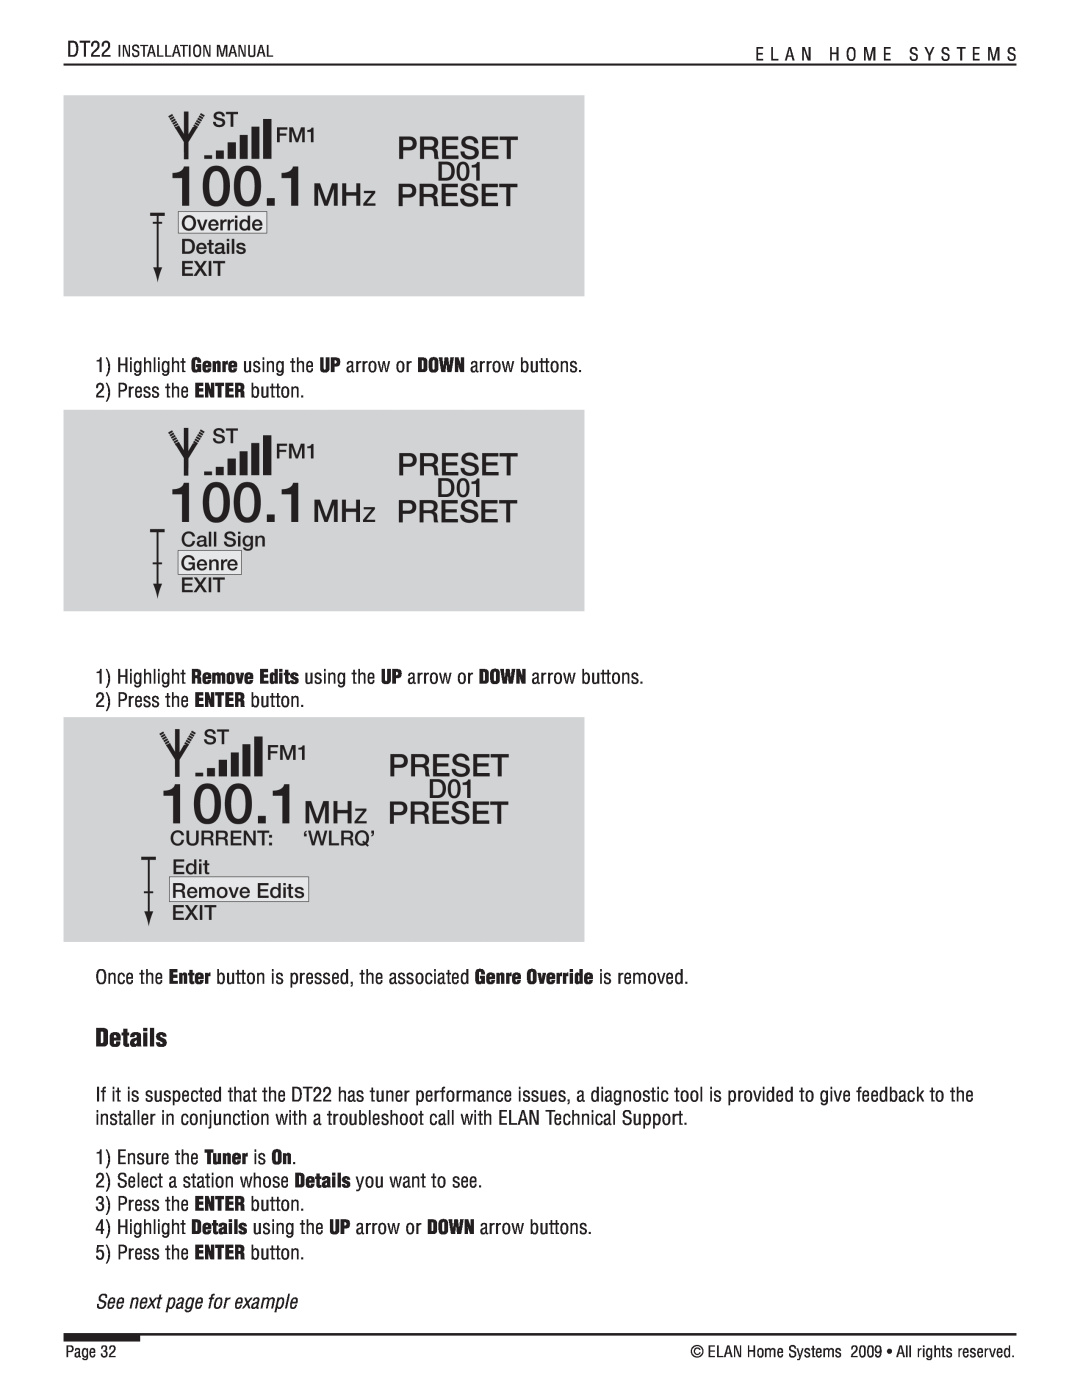 ELAN Home Systems DT22 manual Details, 100.1MHZ PRESET, Preset 